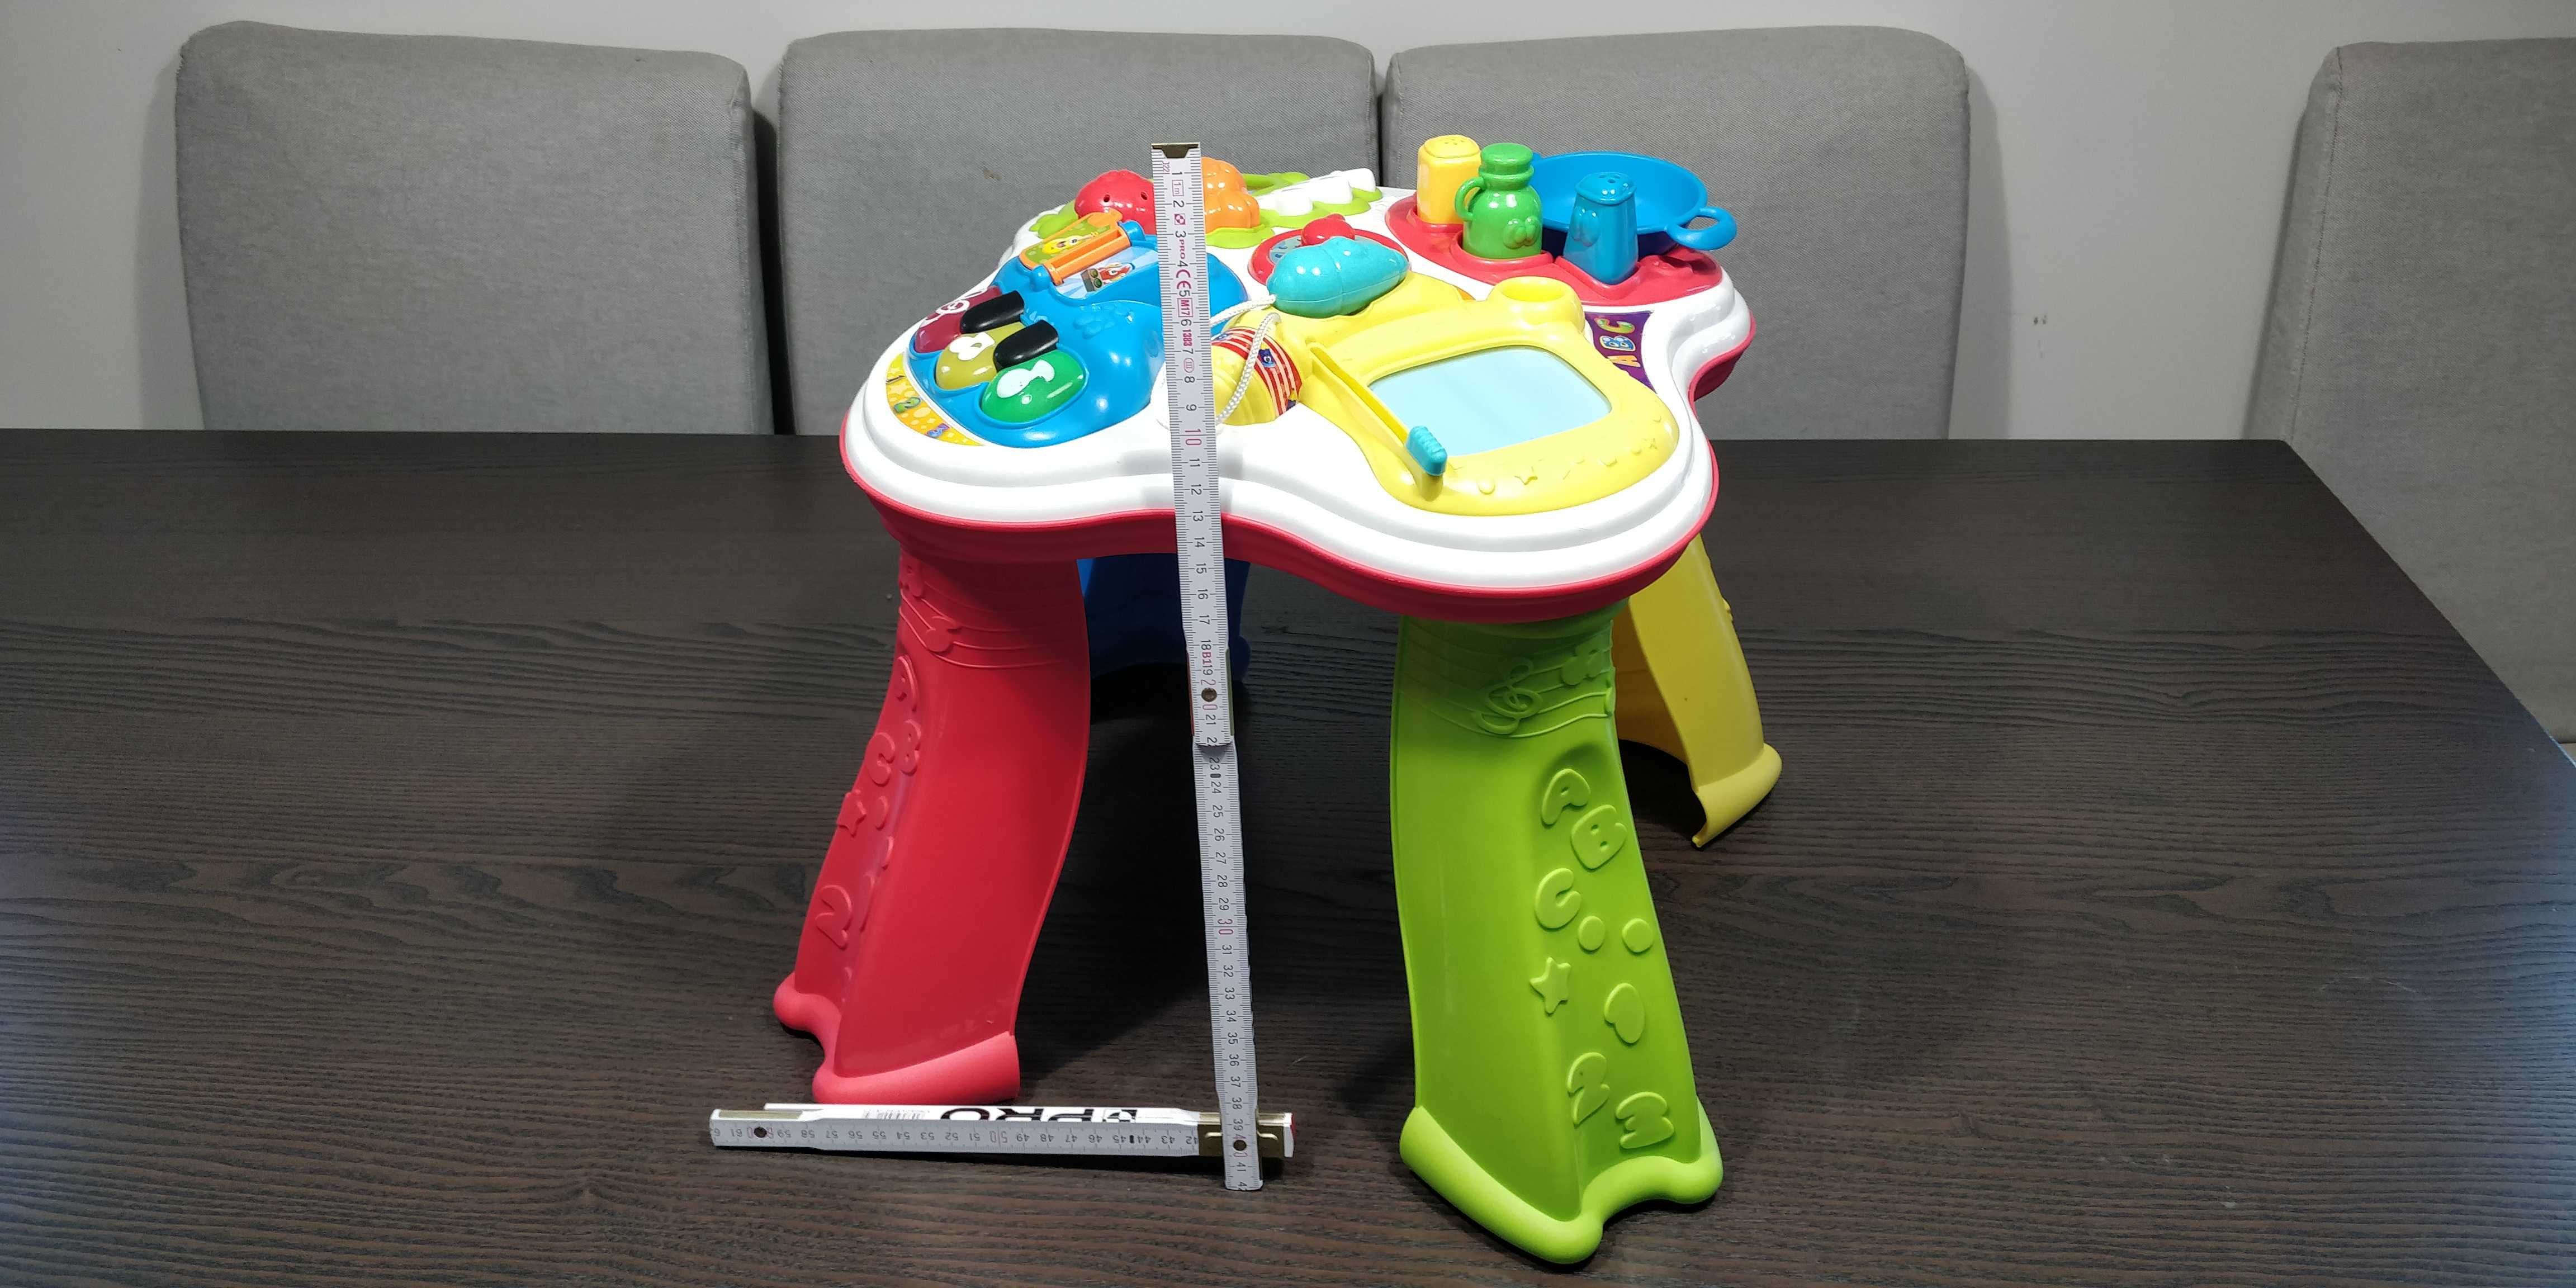 Stolik interaktywny, zabawka dla dziecka